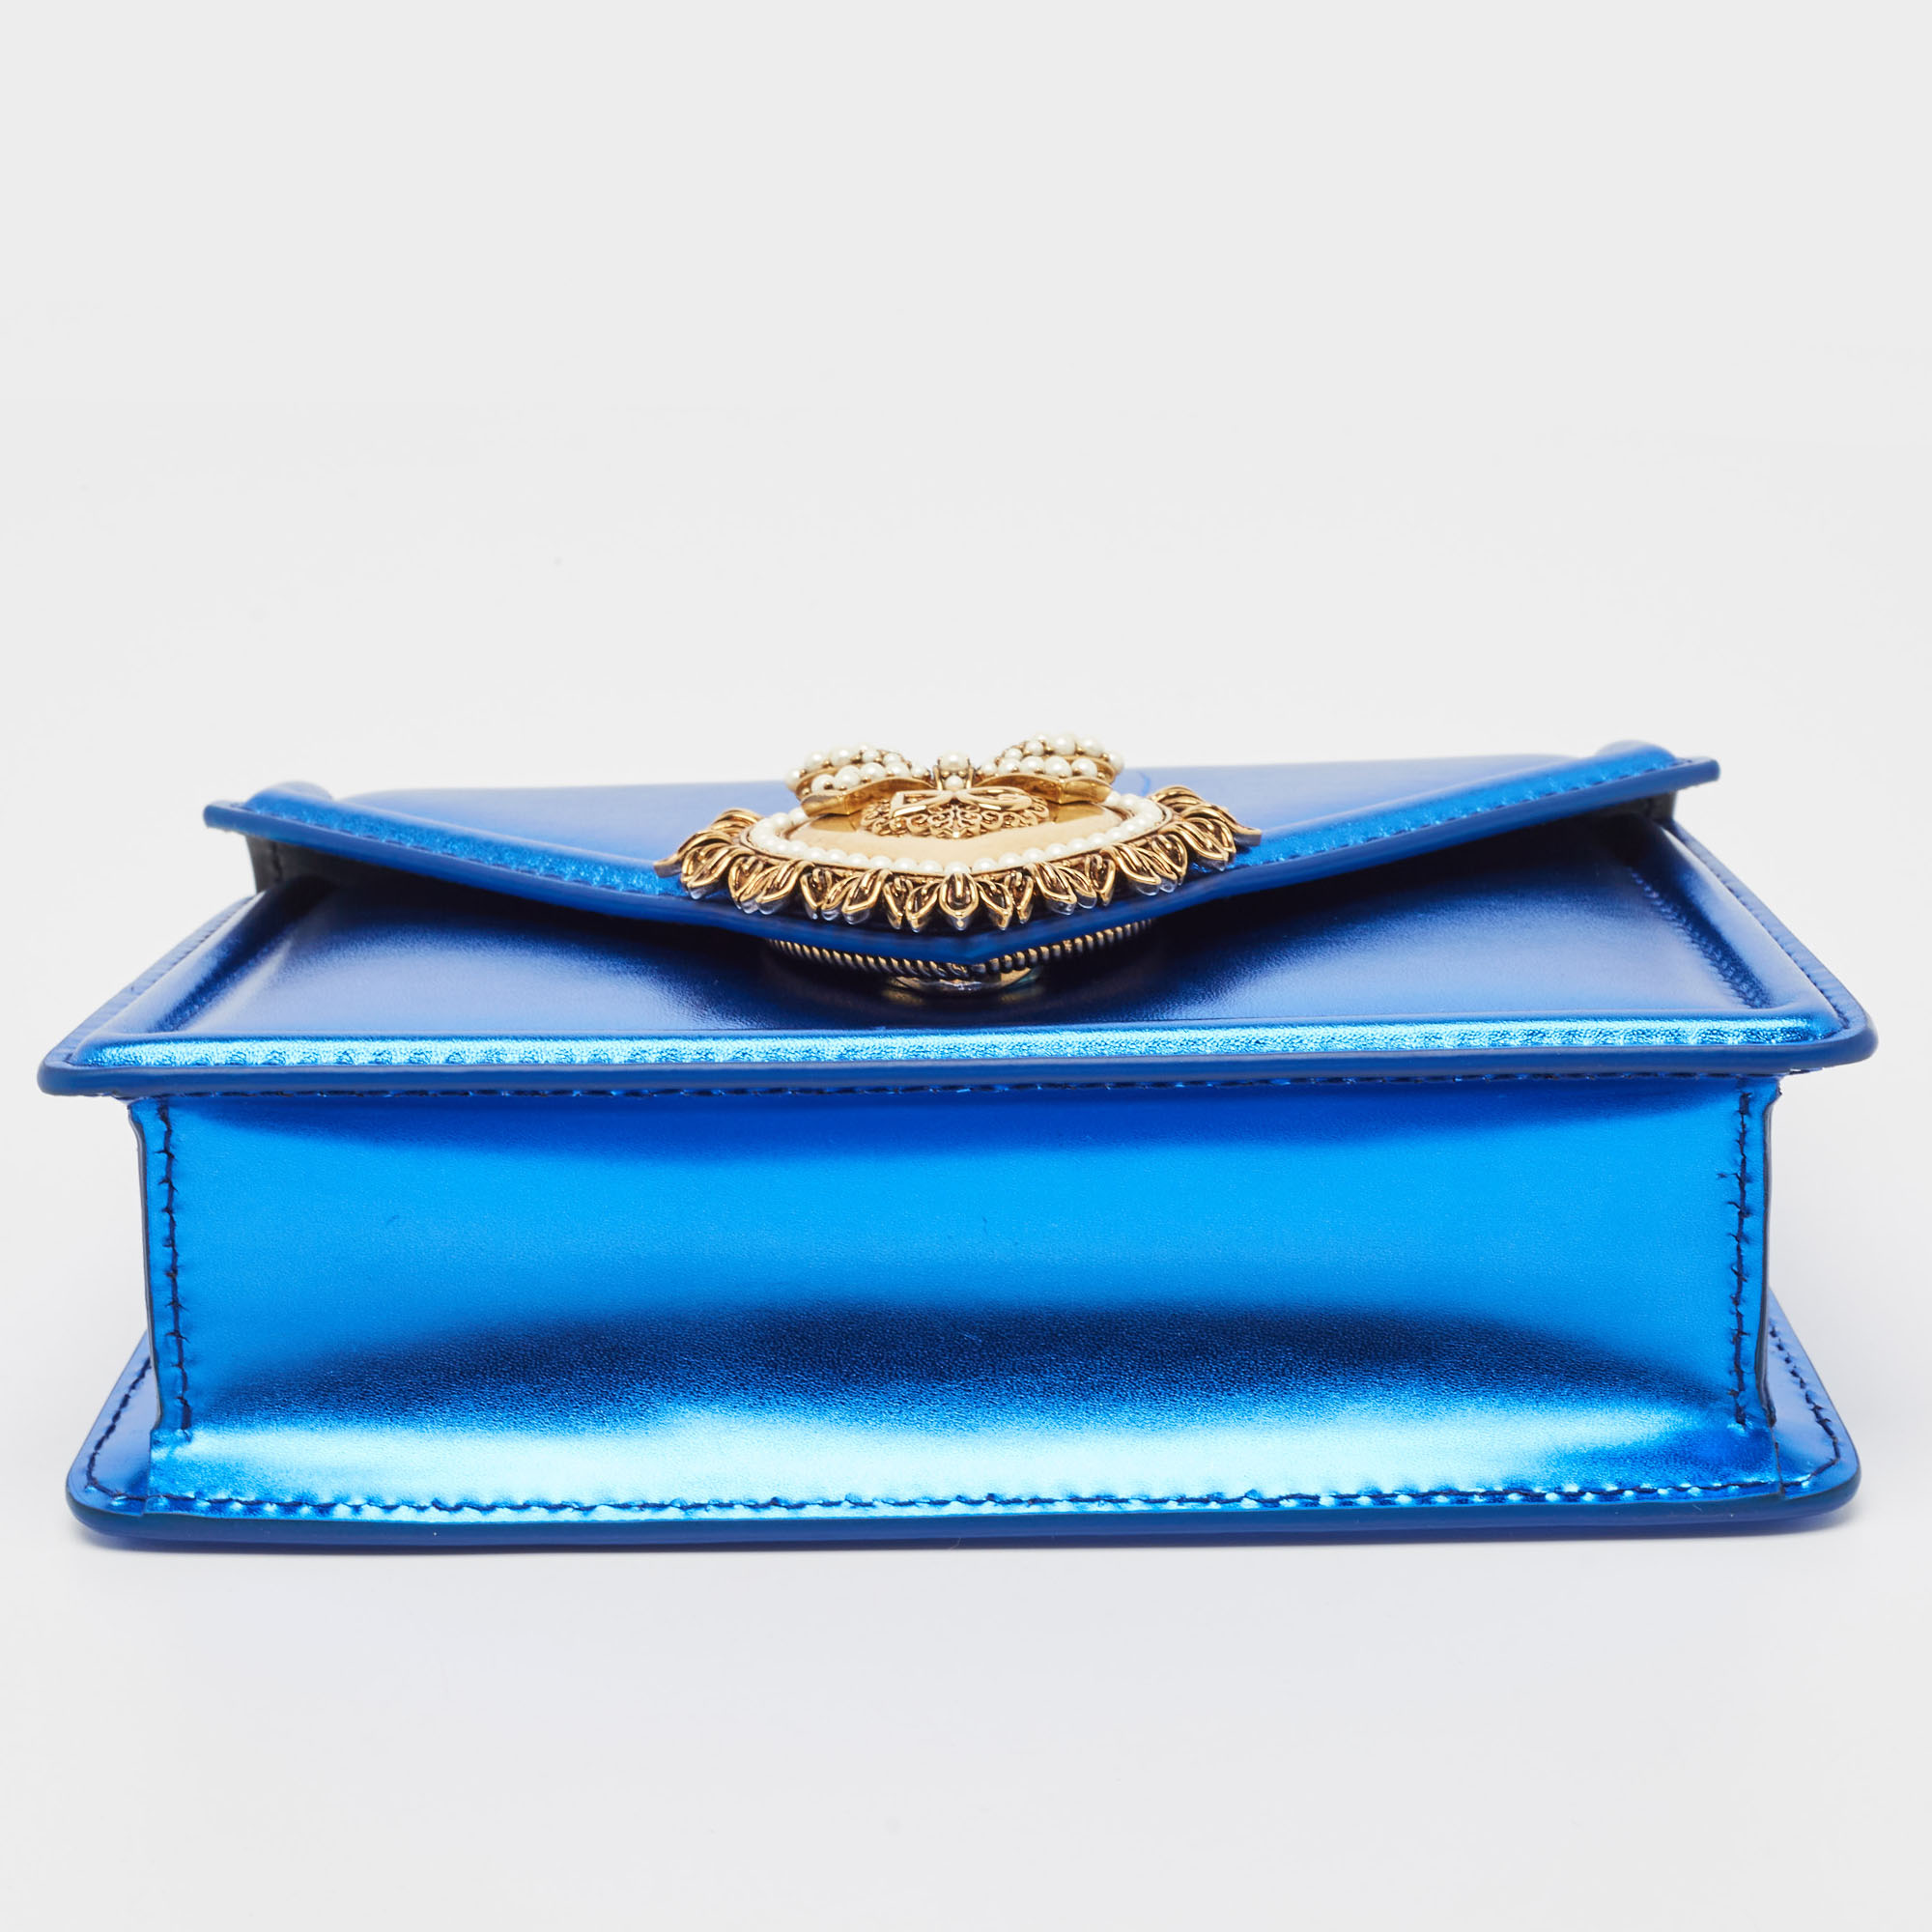 Dolce & Gabbana Metallic Blue Leather Small Devotion Top Handle Bag